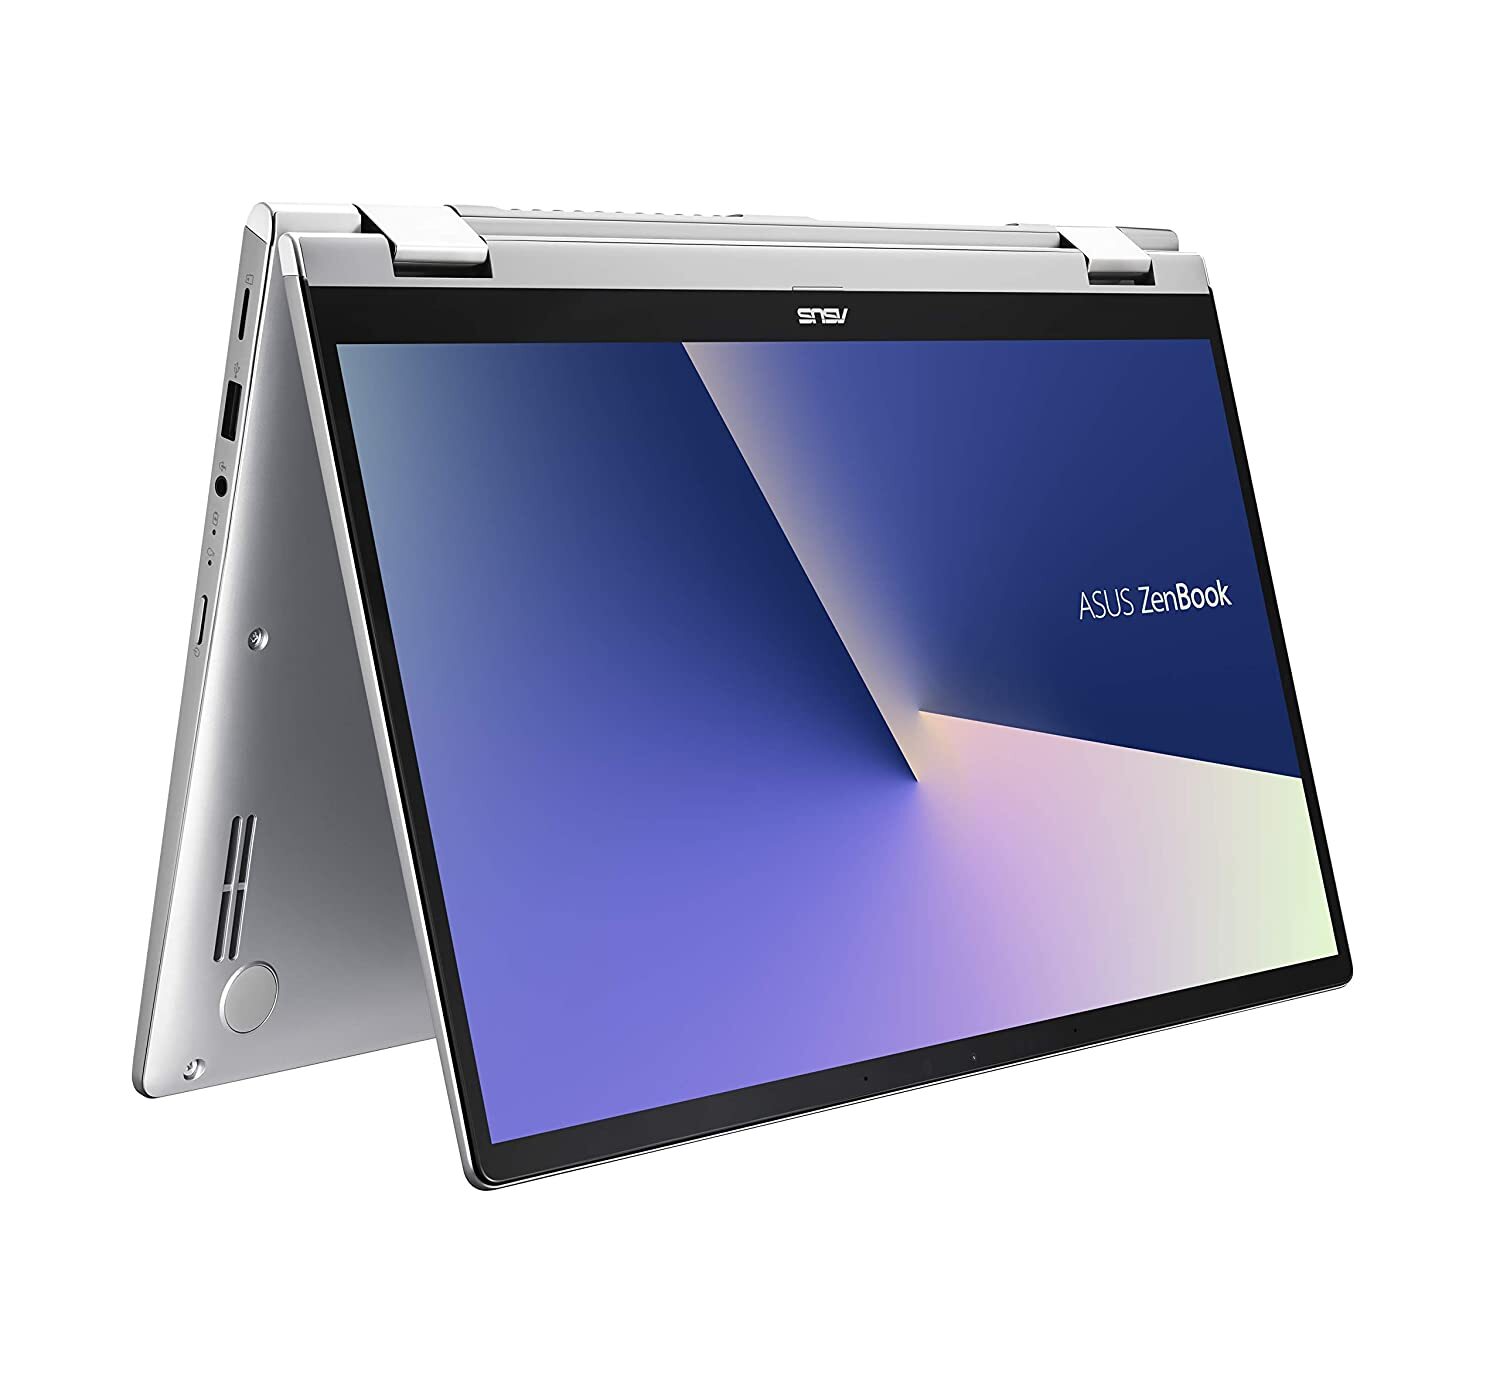 ASUS ZenBook Flip 14 UM462DA-AI701TS AMD Ryzen 7-3700U 14-inch FHD Touchscreen 2-in-1 Thin & Light Laptop (8GB RAM/512GB PCIe SSD/Windows 10/MS-Office 2019/Integrated Graphics/1.60 Kg)